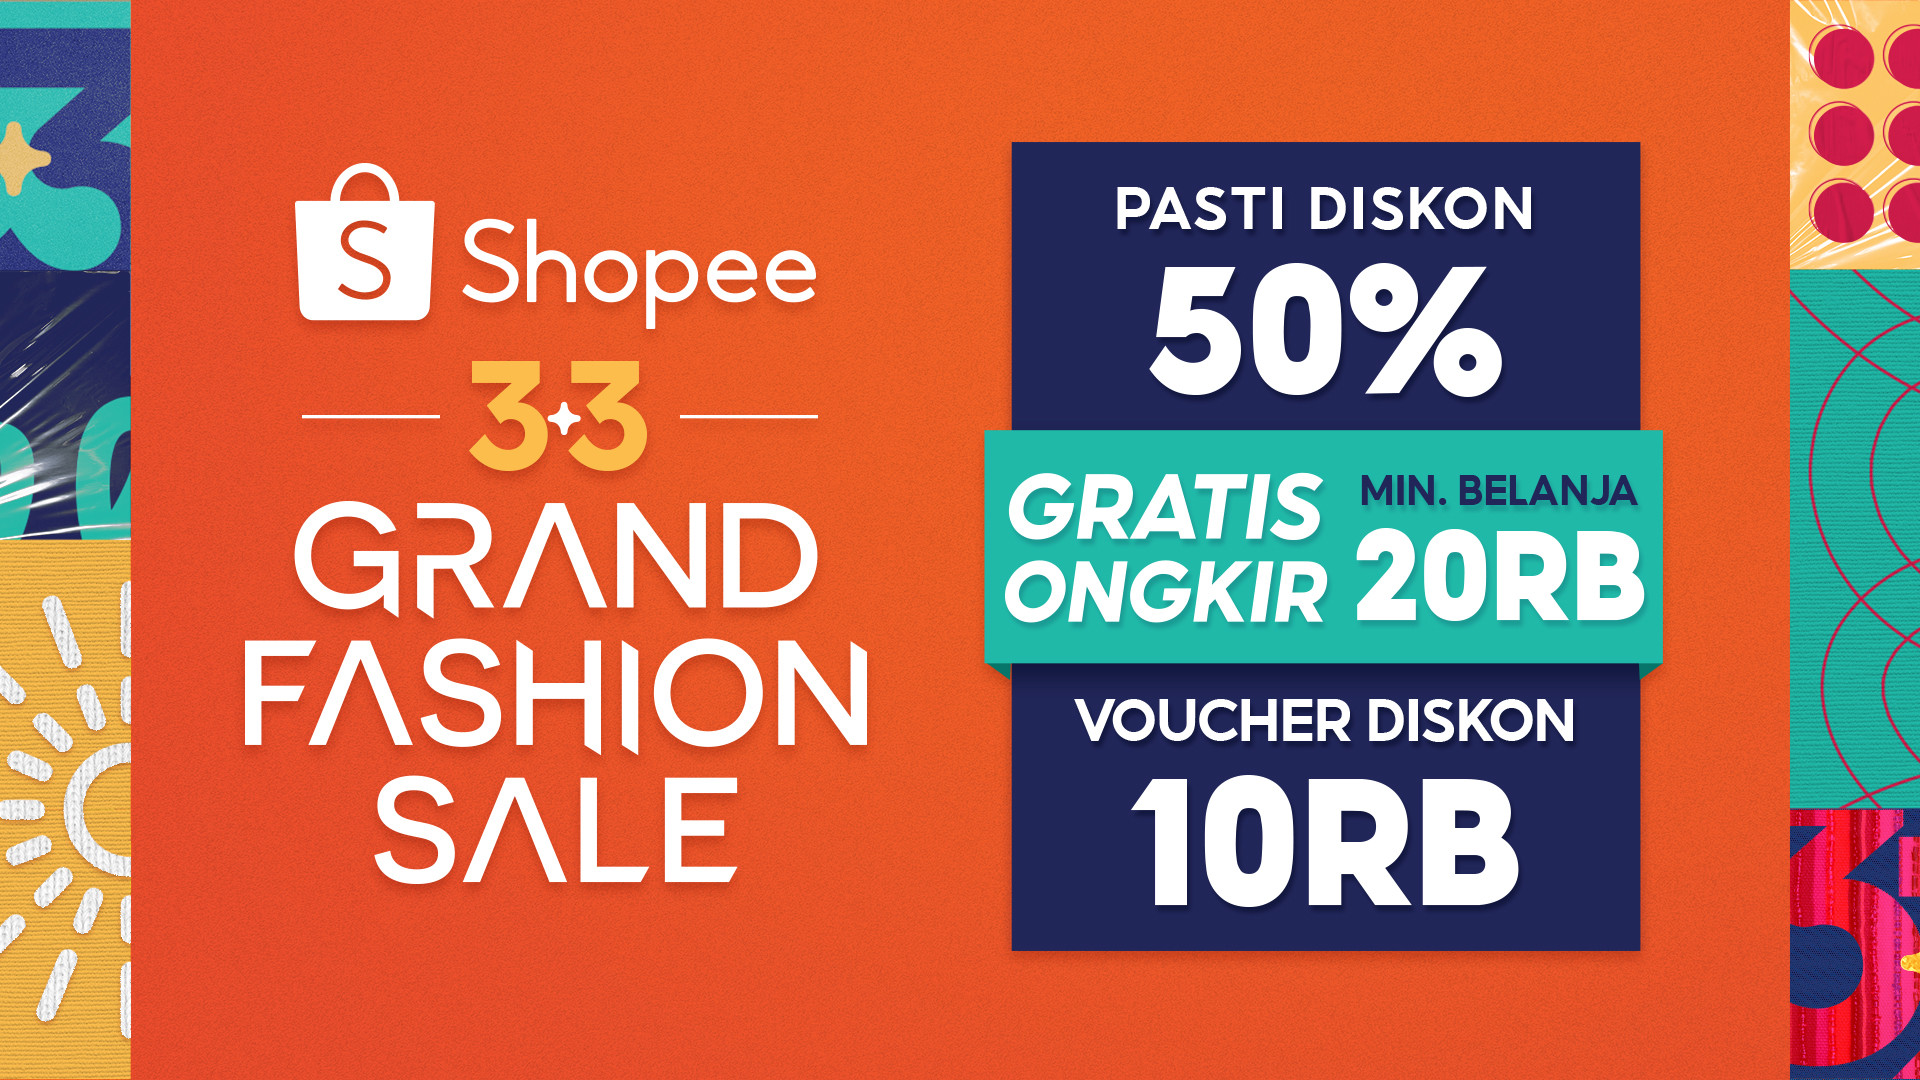 Shopee 3.3 Grand Fashion Sale Dimulai, Yuk Lengkapi Outfit Kekinianmu!